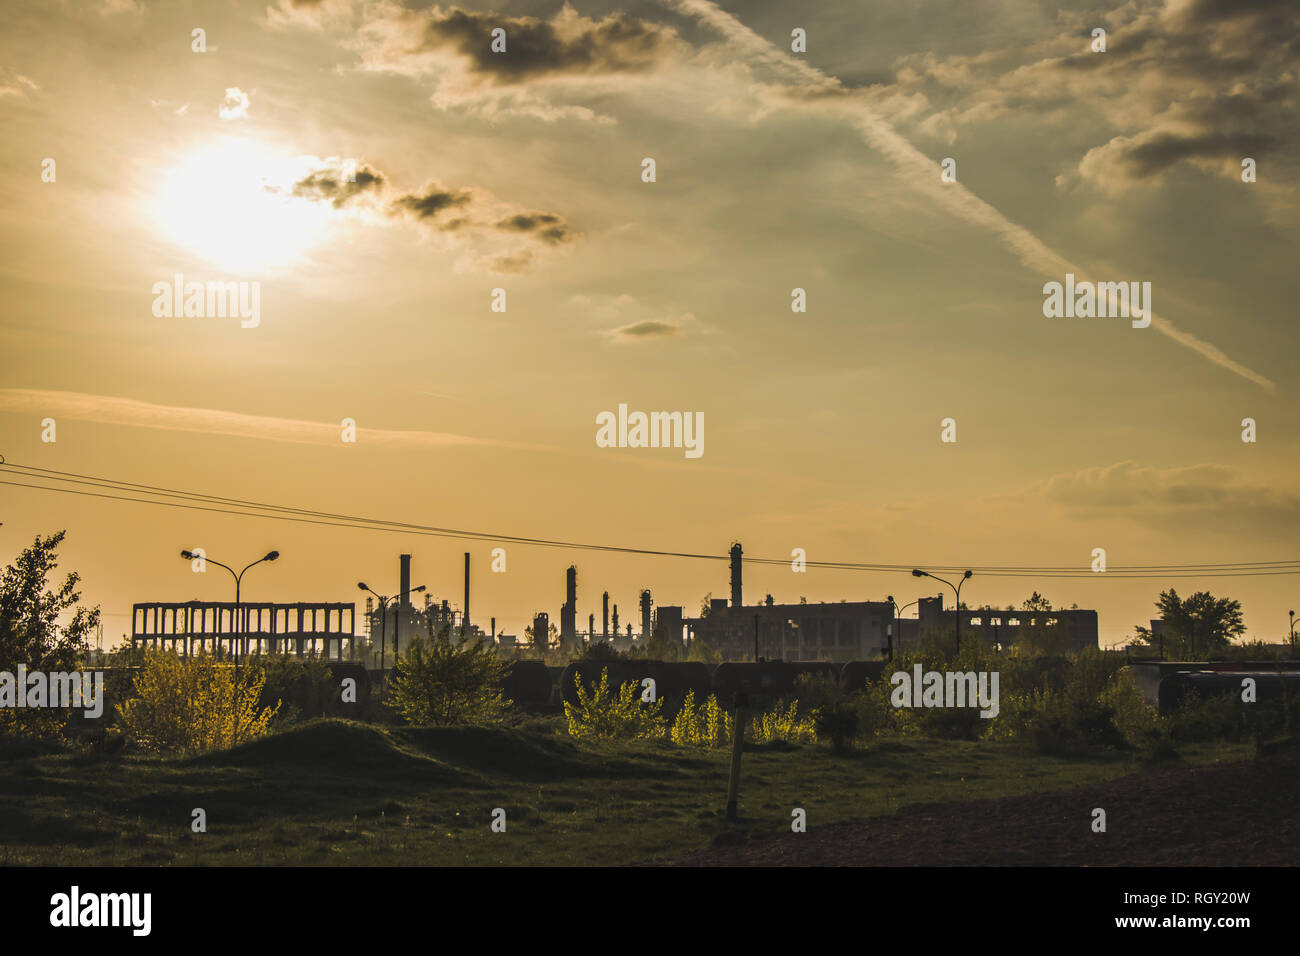 A dark industrial landscape scene Stock Photo